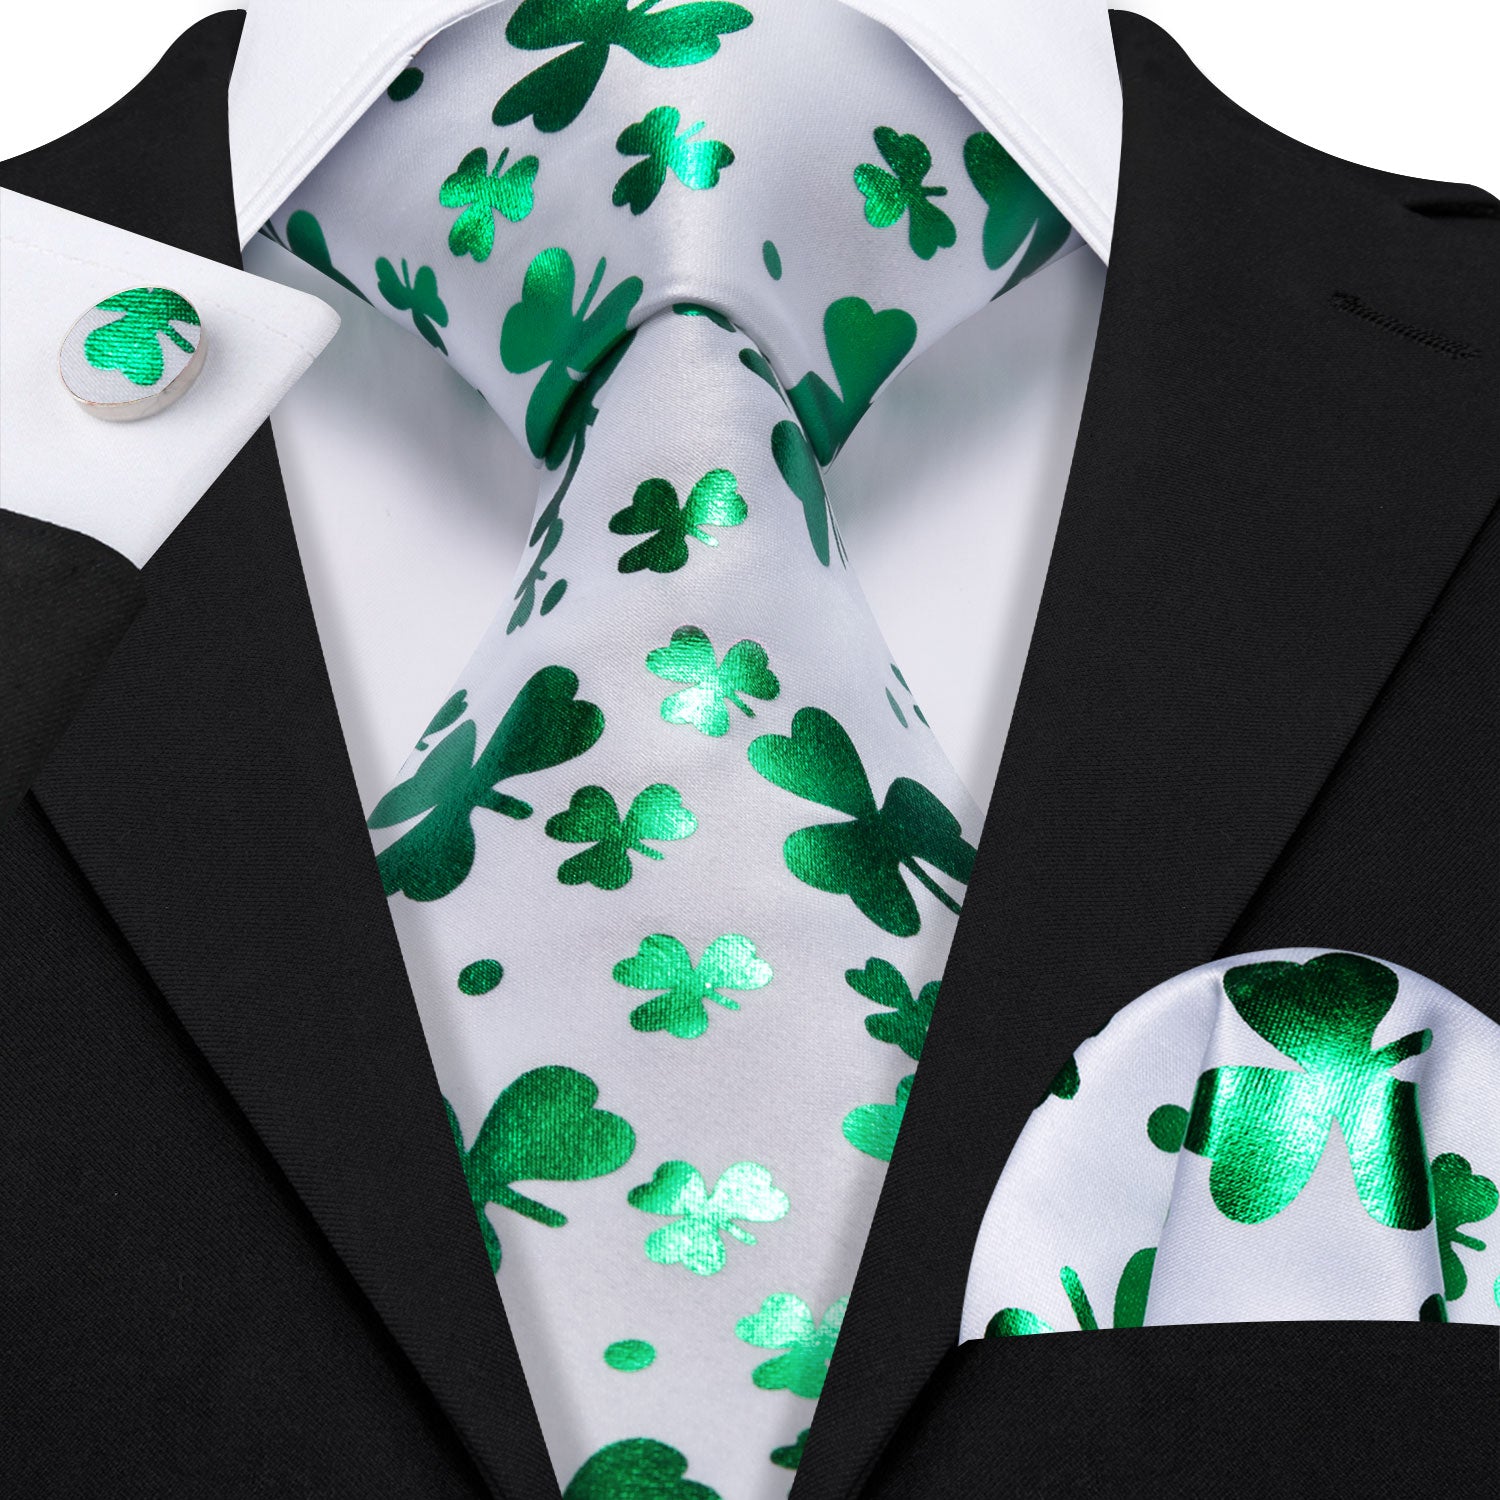 Barry Wang White Tie Clover Green Silk Tie Handkerchief Cufflinks Set for Men